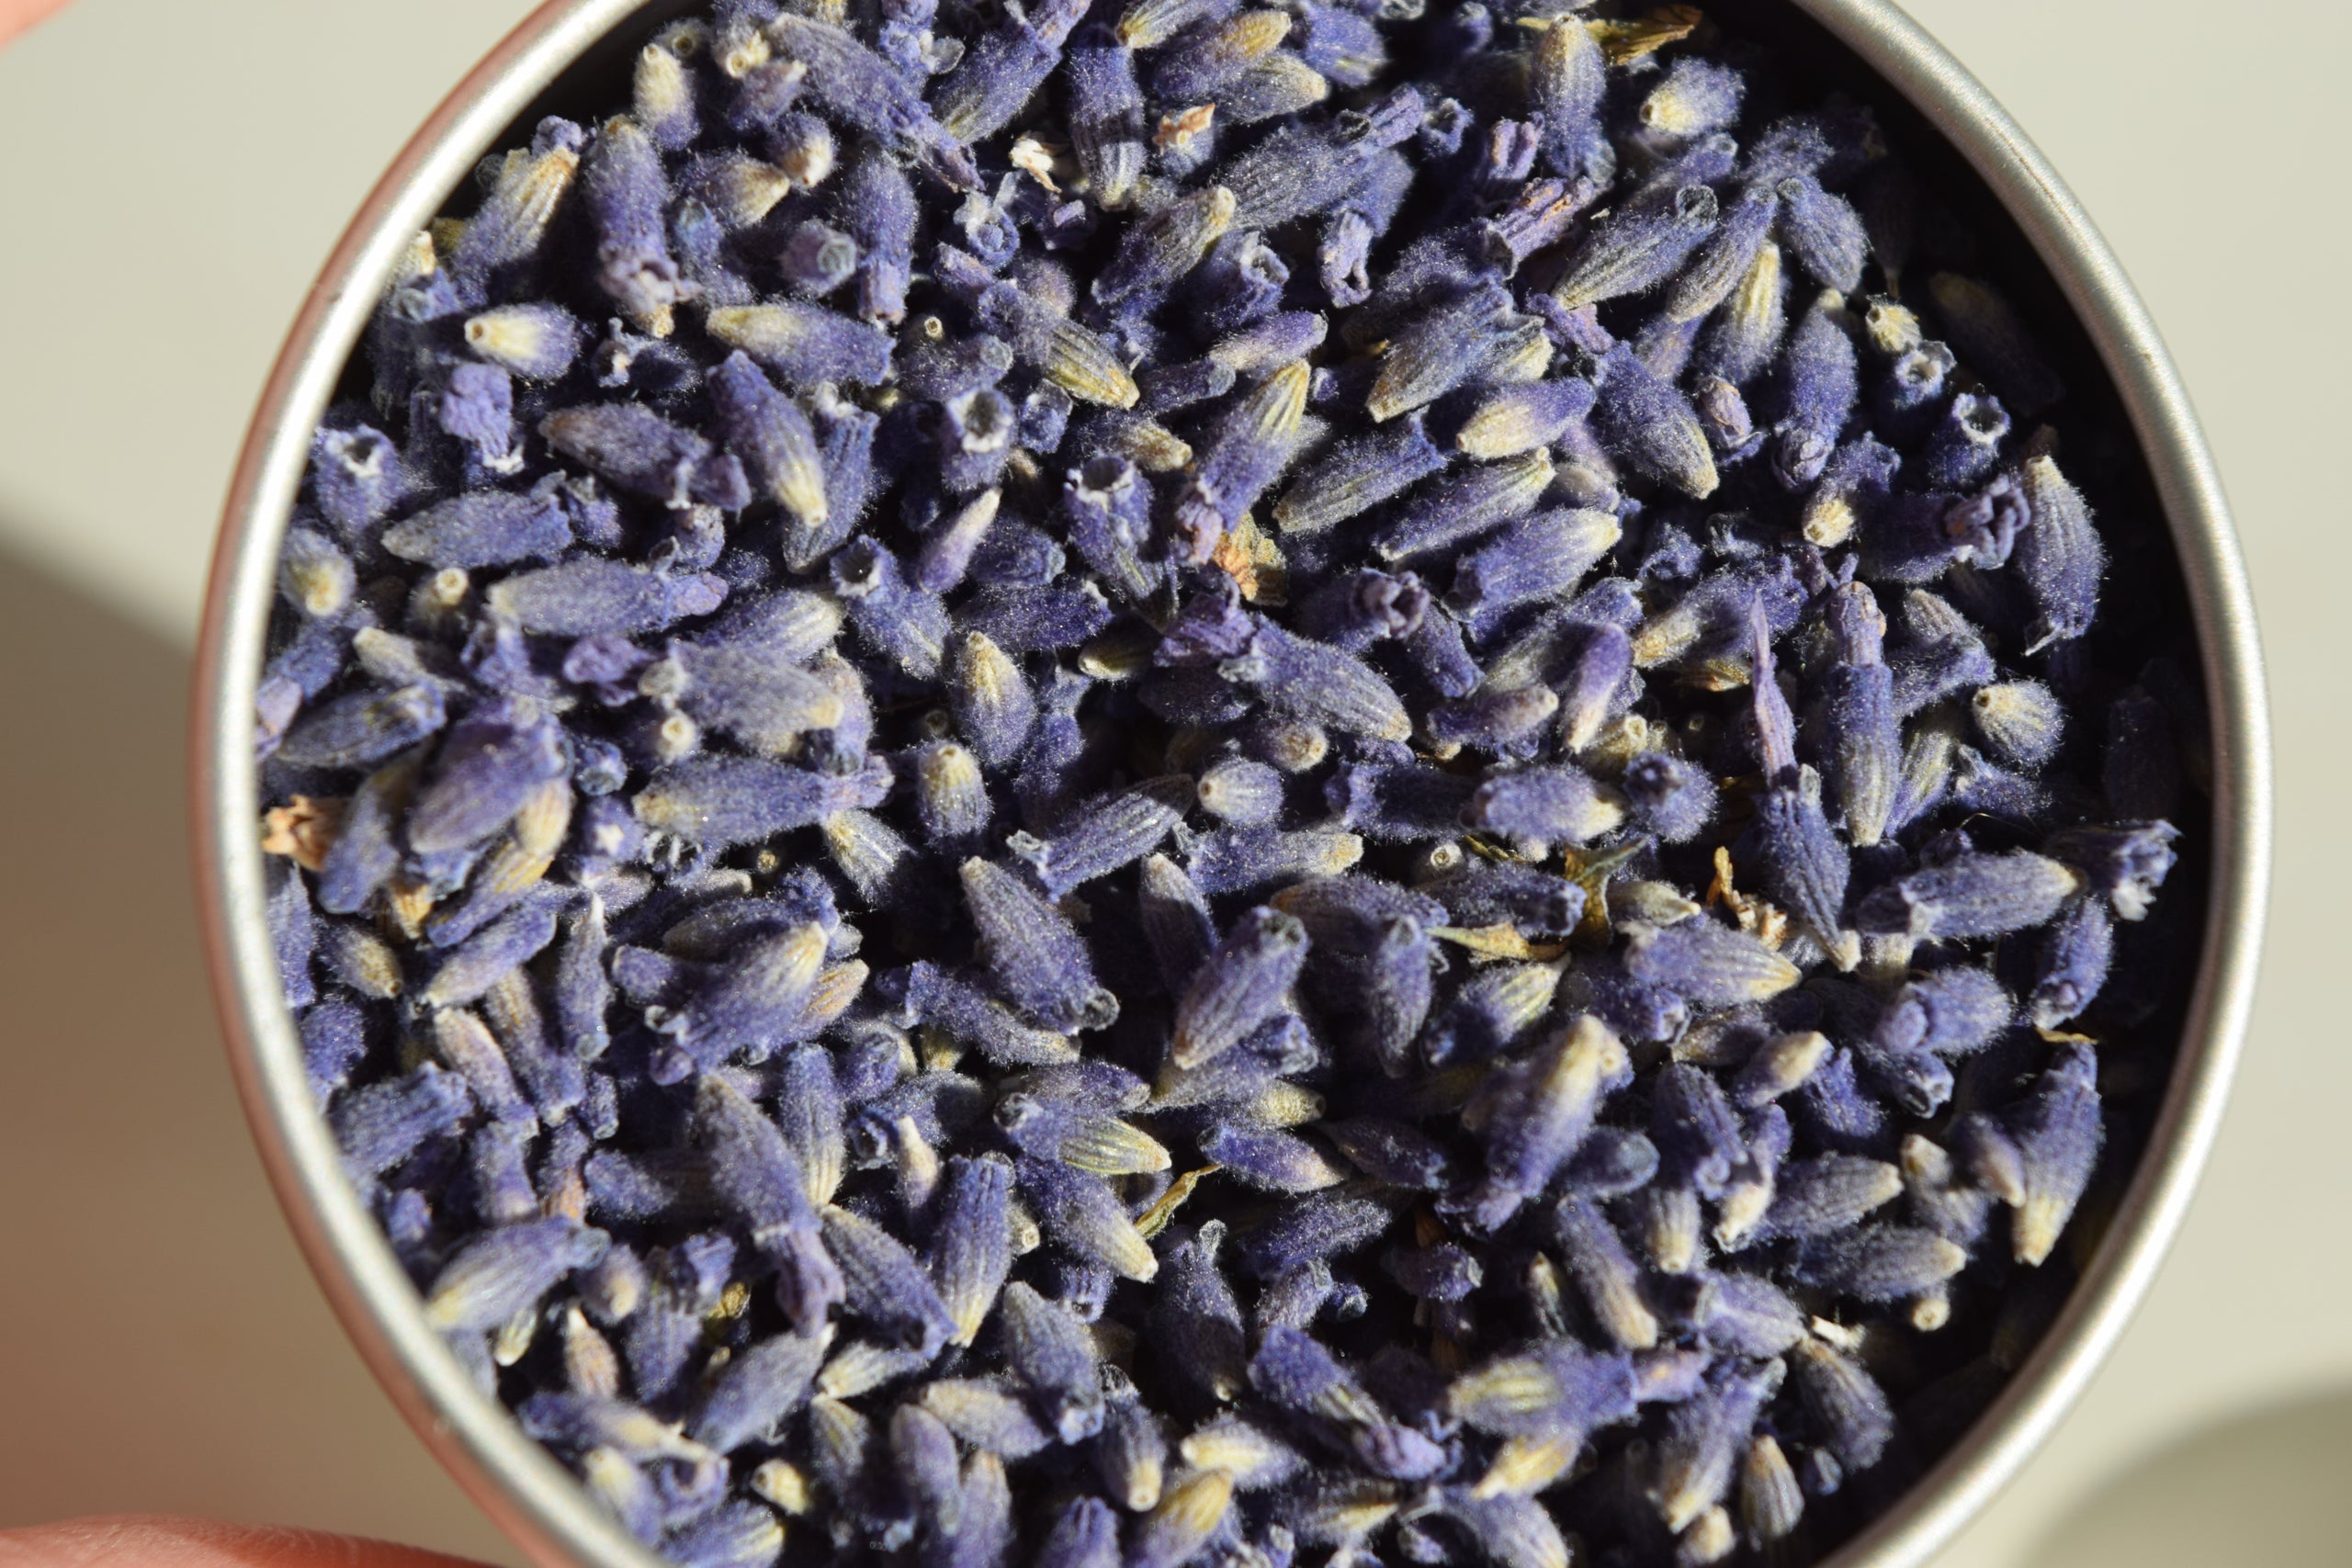 Lavandula angustifolia 'Royal Velvet' Culinary Lavender - Buy Online at  Annie's Annuals